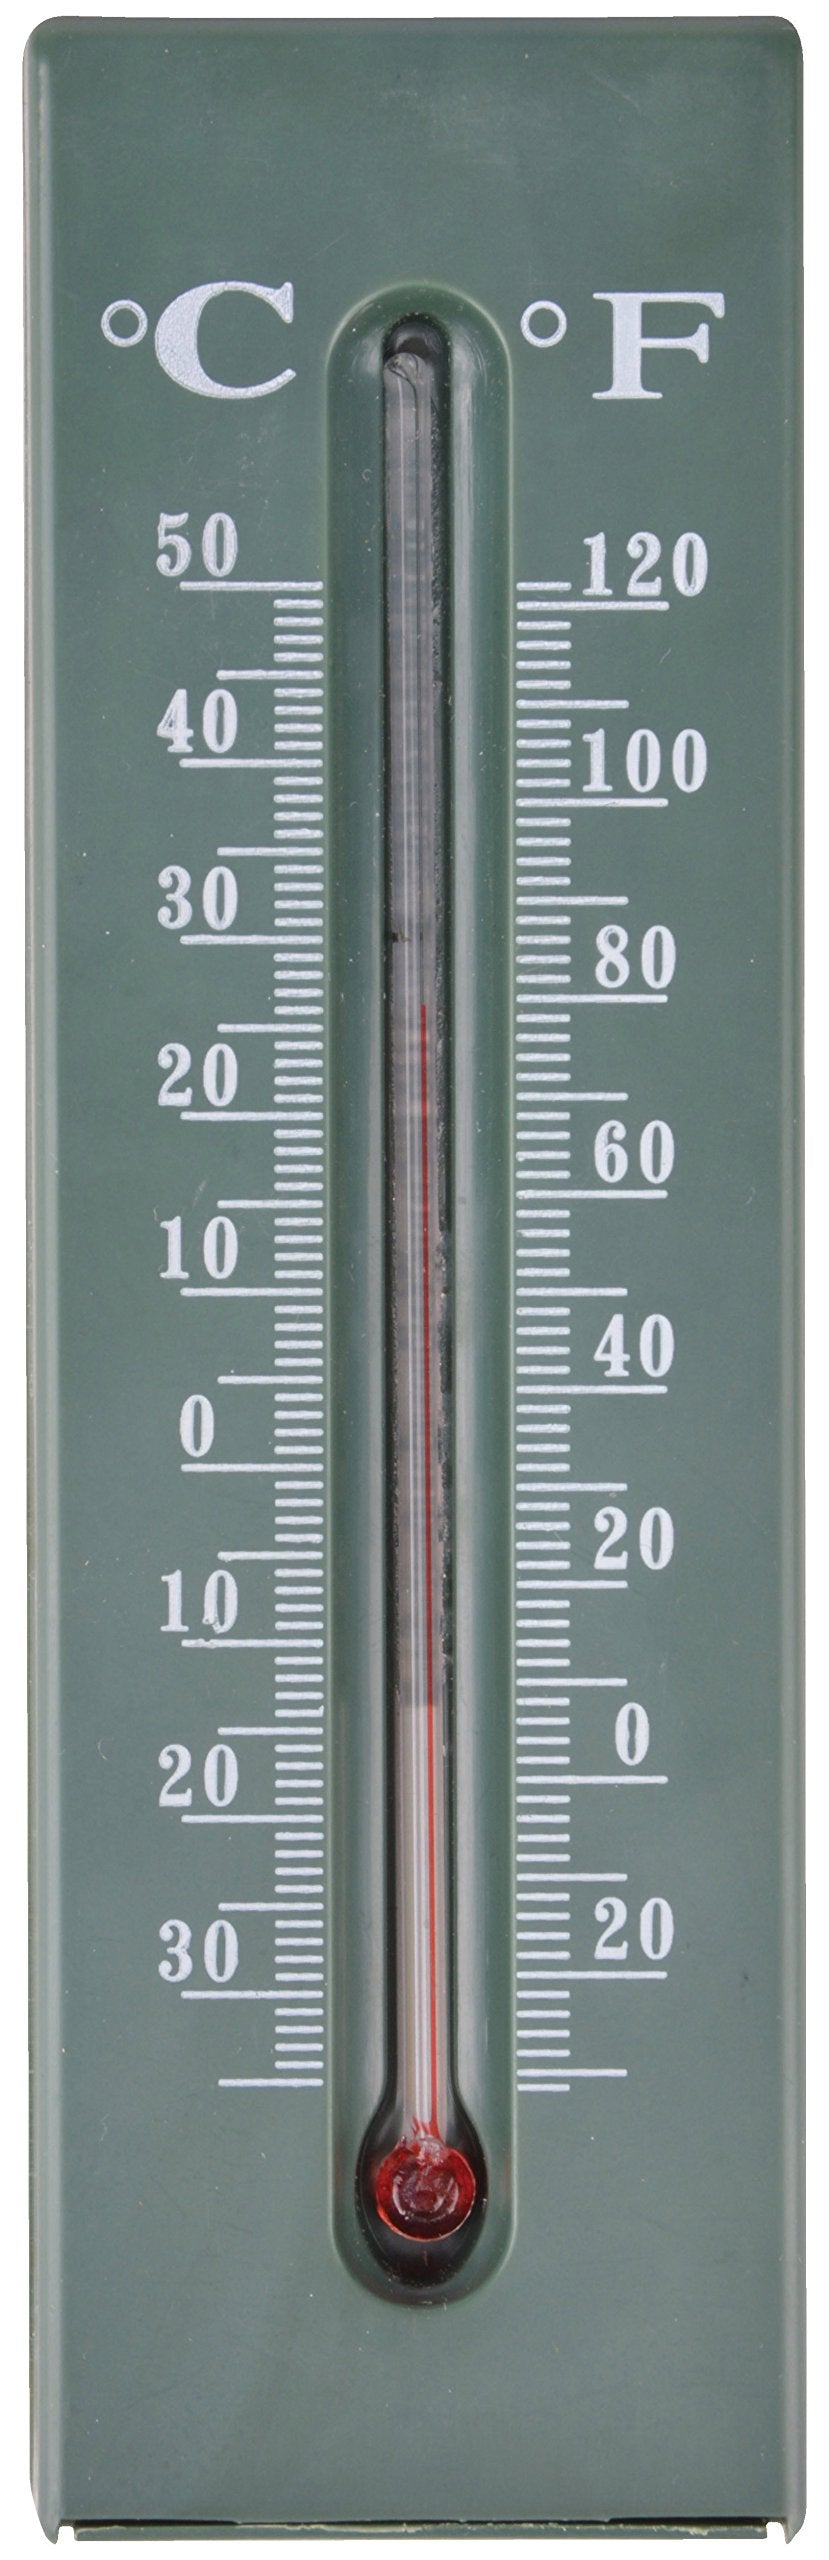 Termometro Pro Tool Esschert Design th78 - Ilgrandebazar